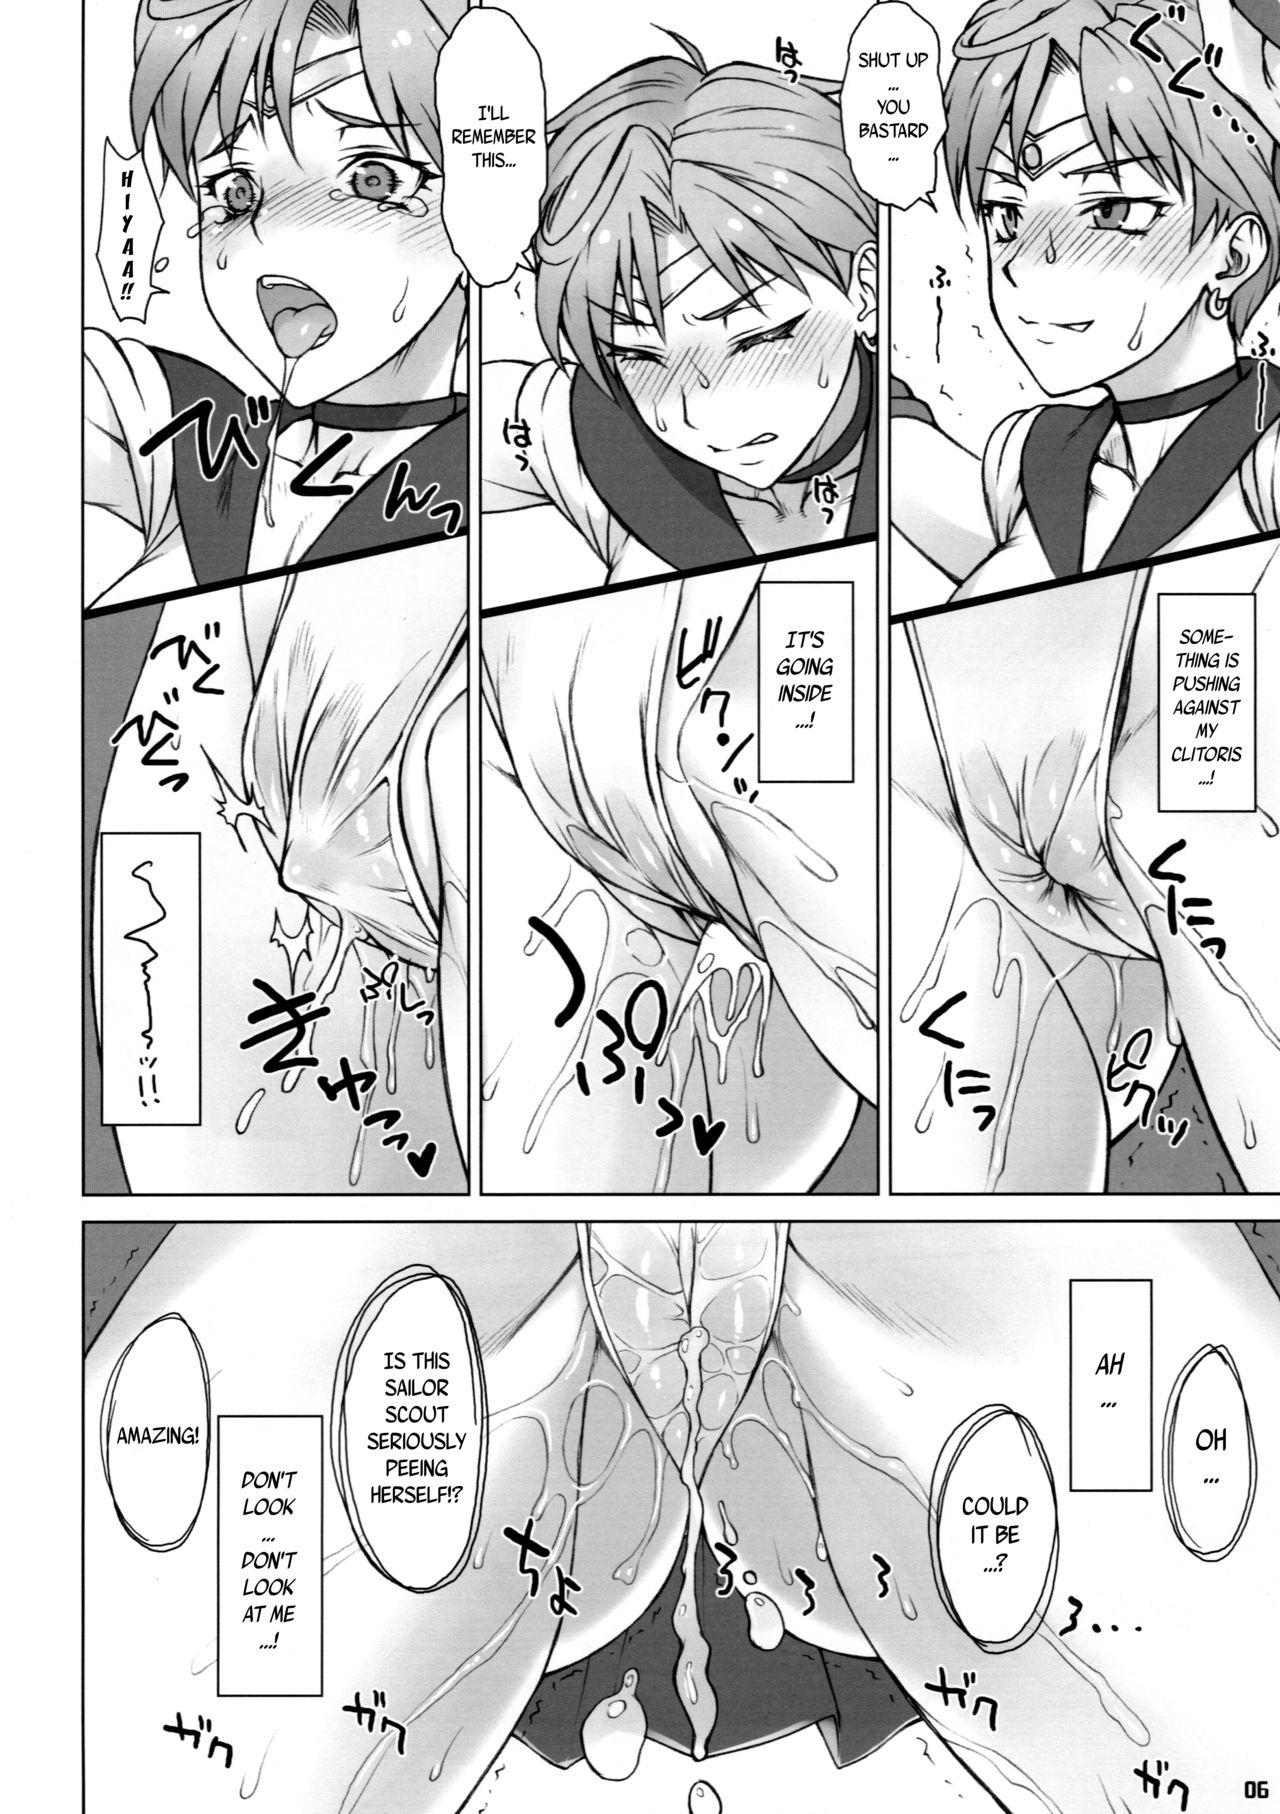 Hot Milf Uranus-san vs Toumei Ningen - Sailor moon Comendo - Page 5